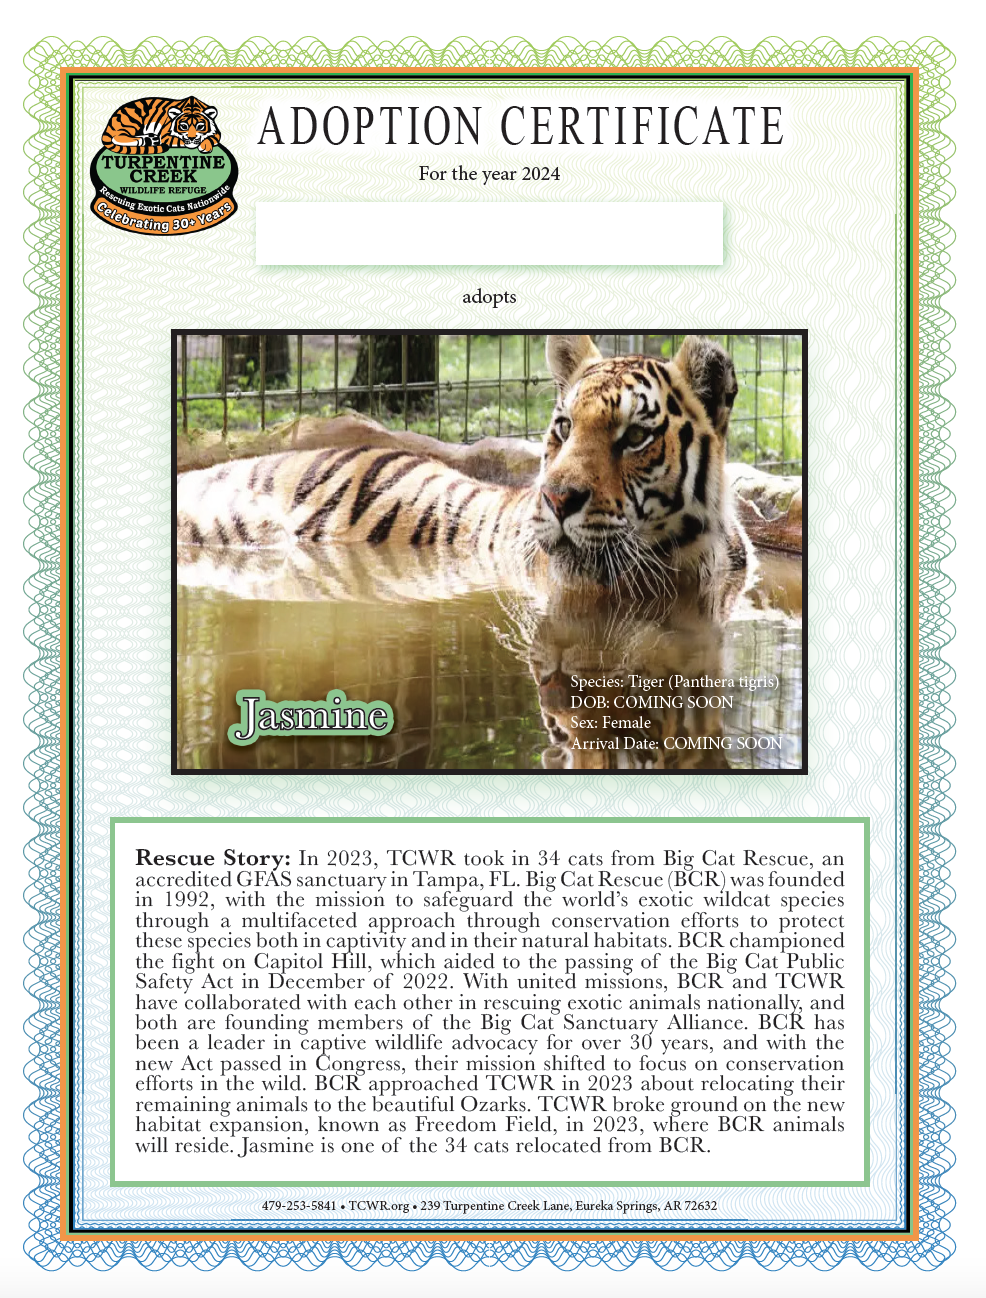 Jasmine 3 Tiger Adoption